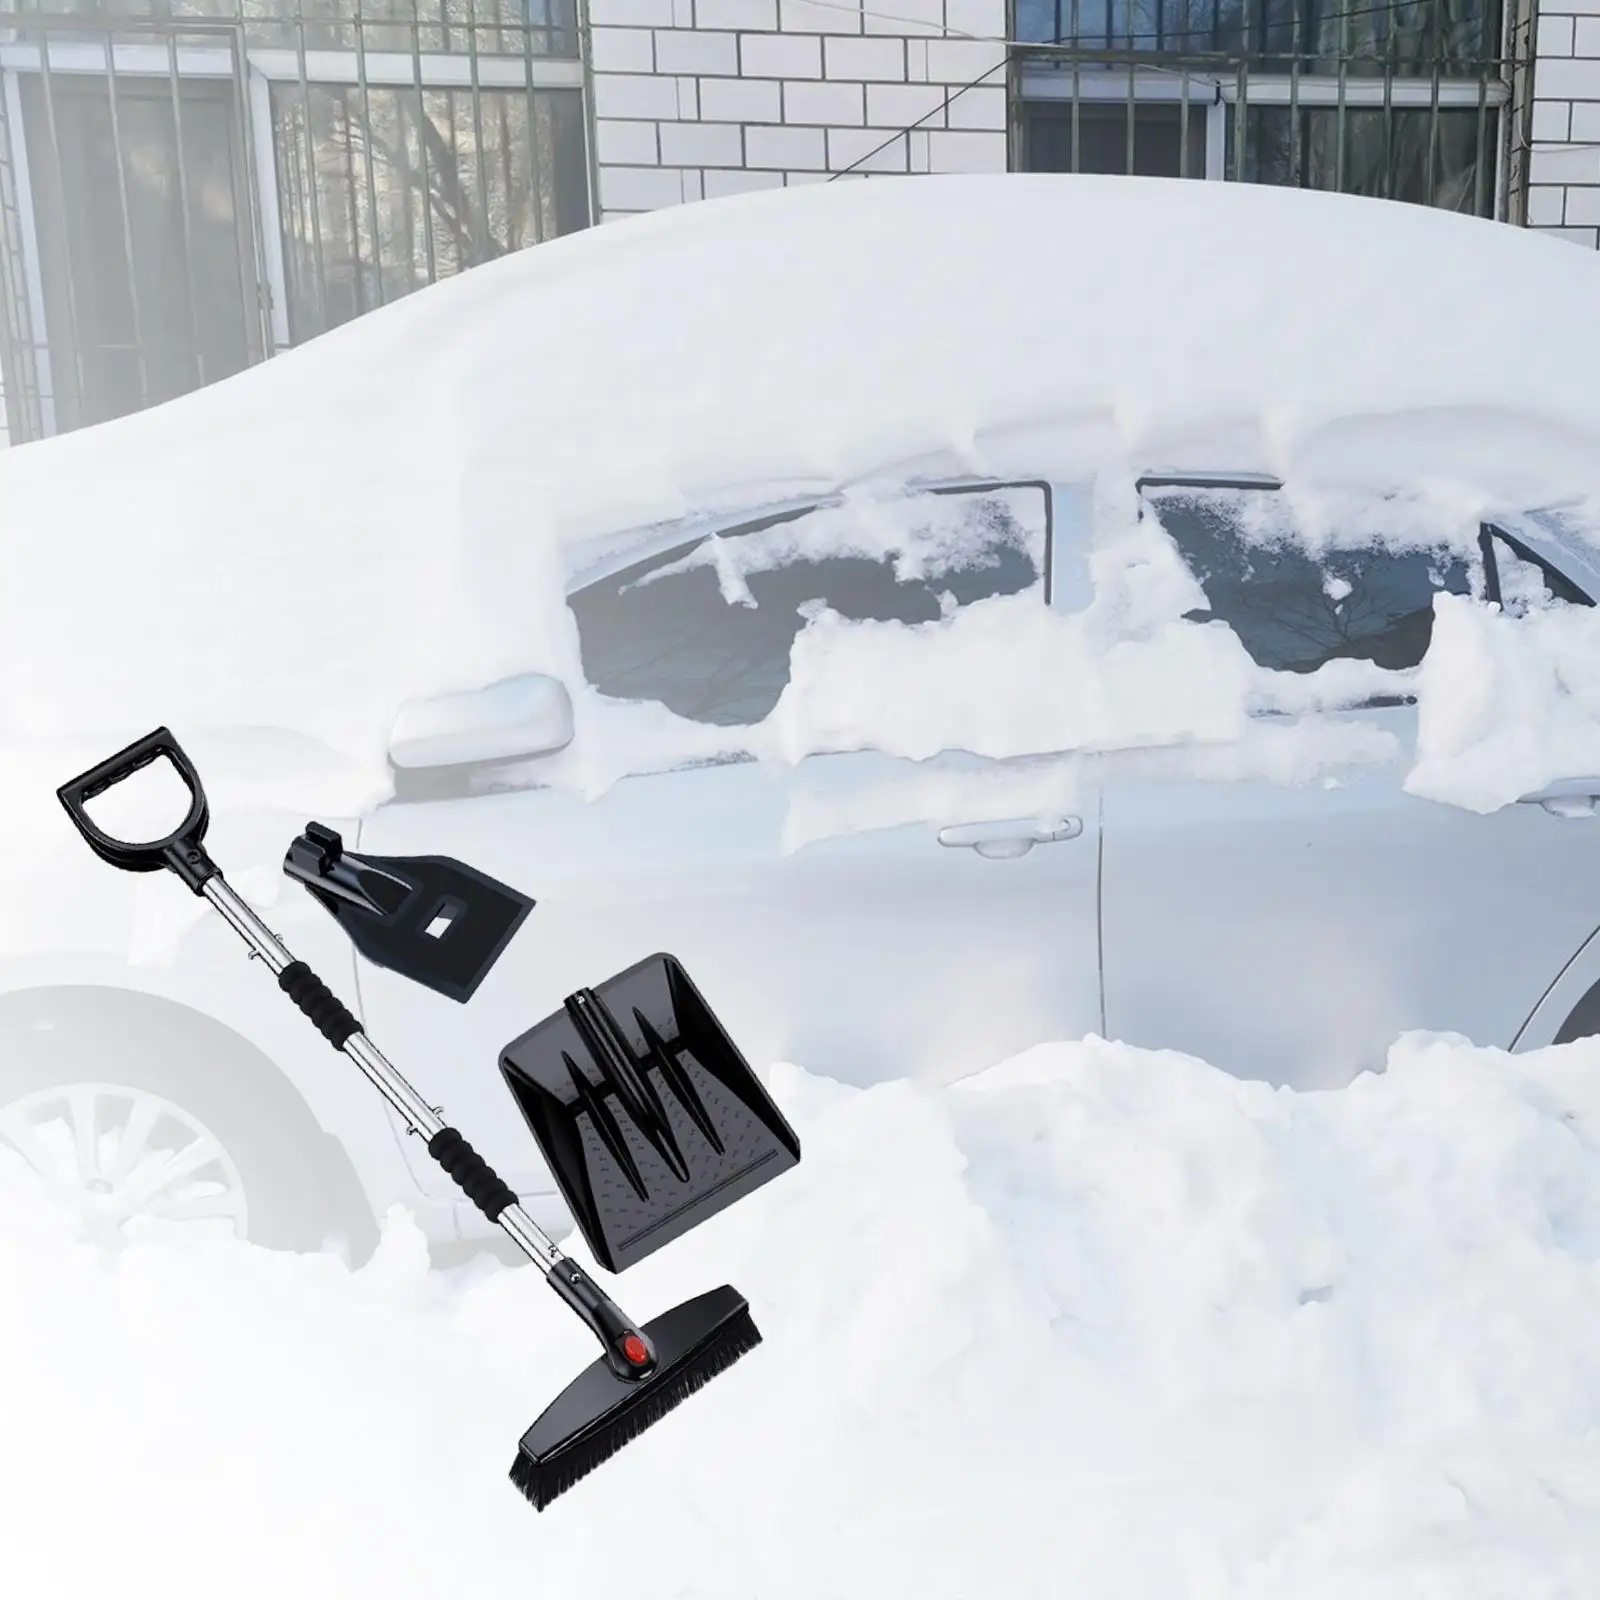 Multifunctional Winter Snow Removal Tool Nylon Brush Anti Slip Sponge Grip Rotatable Head Detachable Design for Vehicles